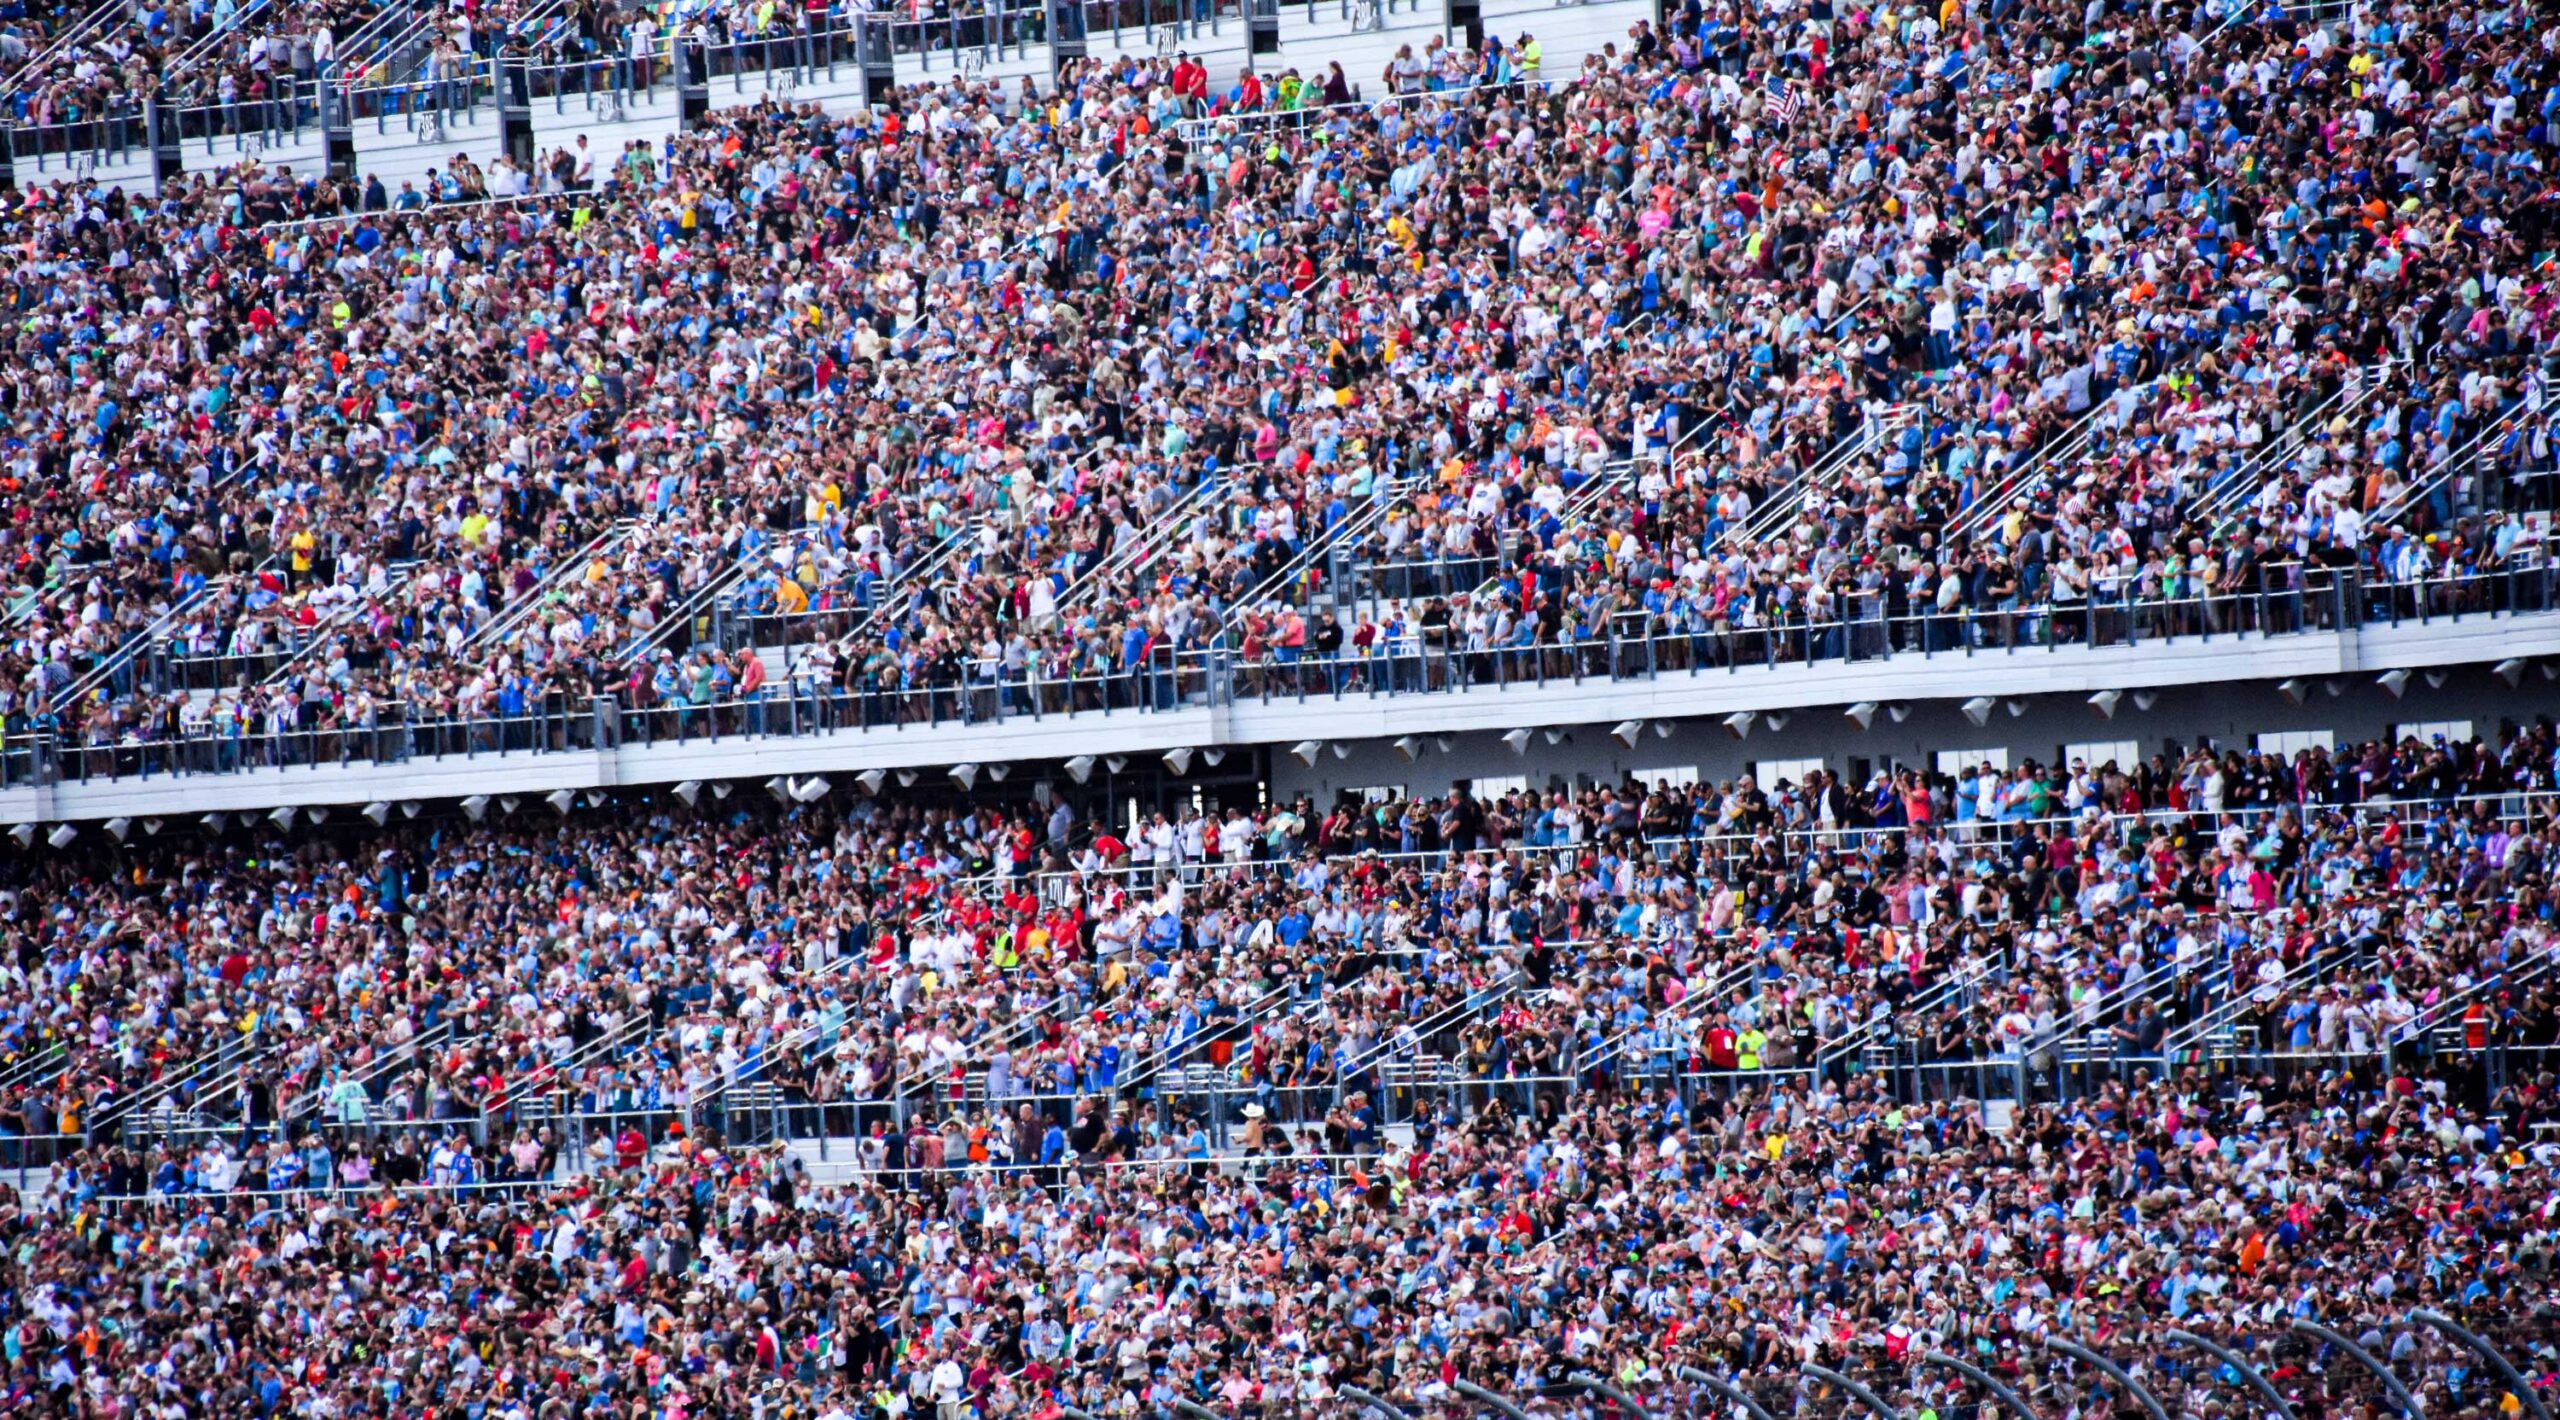 Crowd at Daytona 500